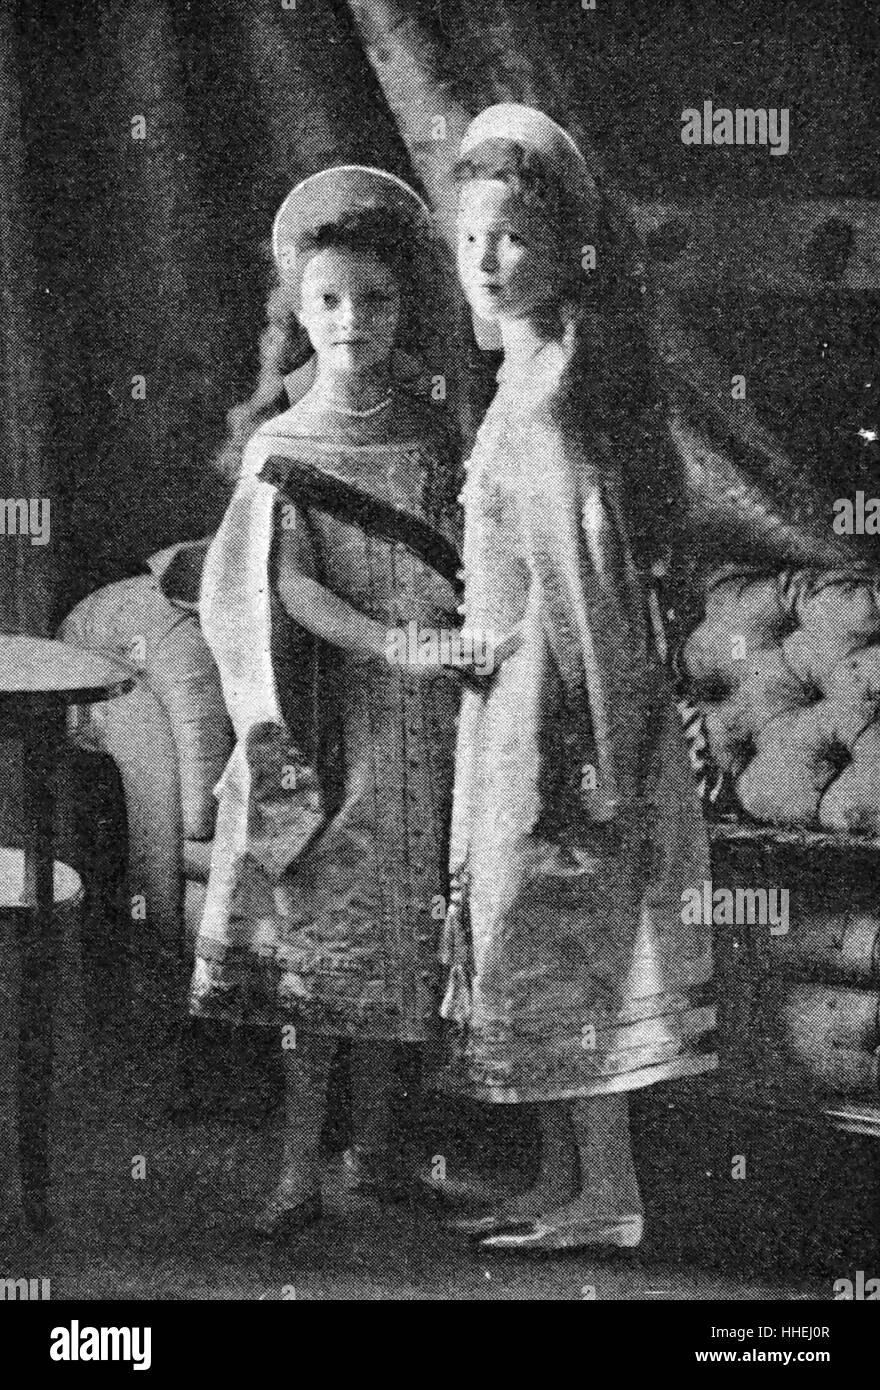 Photographic portrait of the Grand Duchess Olga Nikolaevna of Russia (1895-1918) and Grand Duchess Tatiana Nikolaevna of Russia (1897-1918) the two eldest children of Nicholas II of Russia, in their Christening robes. Dated 20th Century Stock Photo